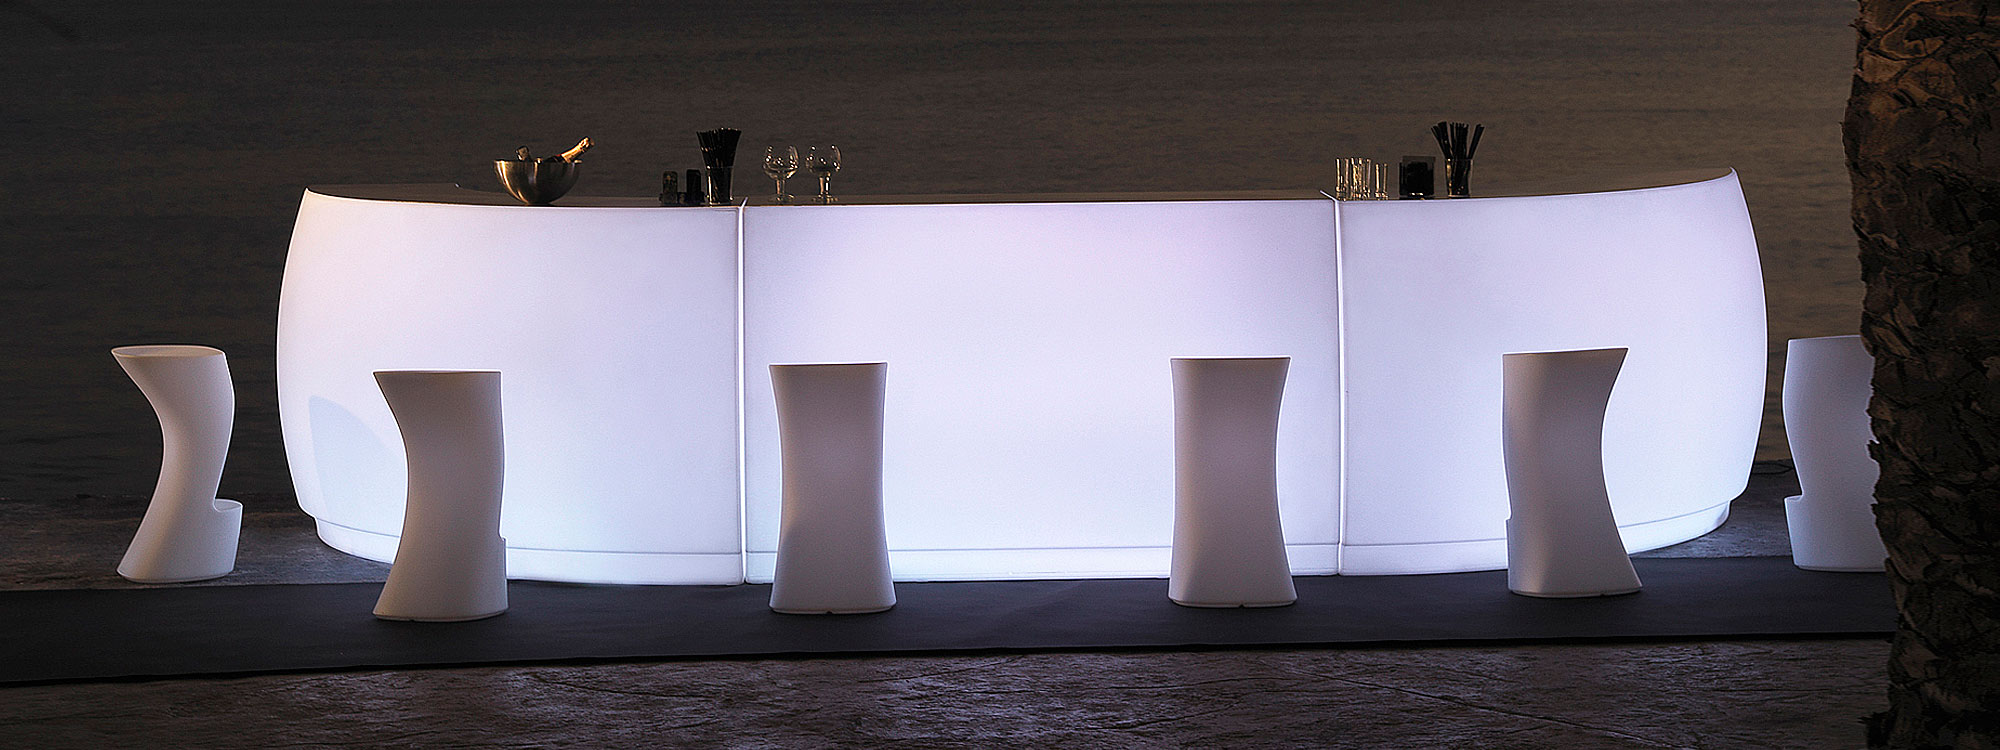 Nighttime image of white illuminated Fiesta modular bar counter and Moma modern bar stools by Vondom